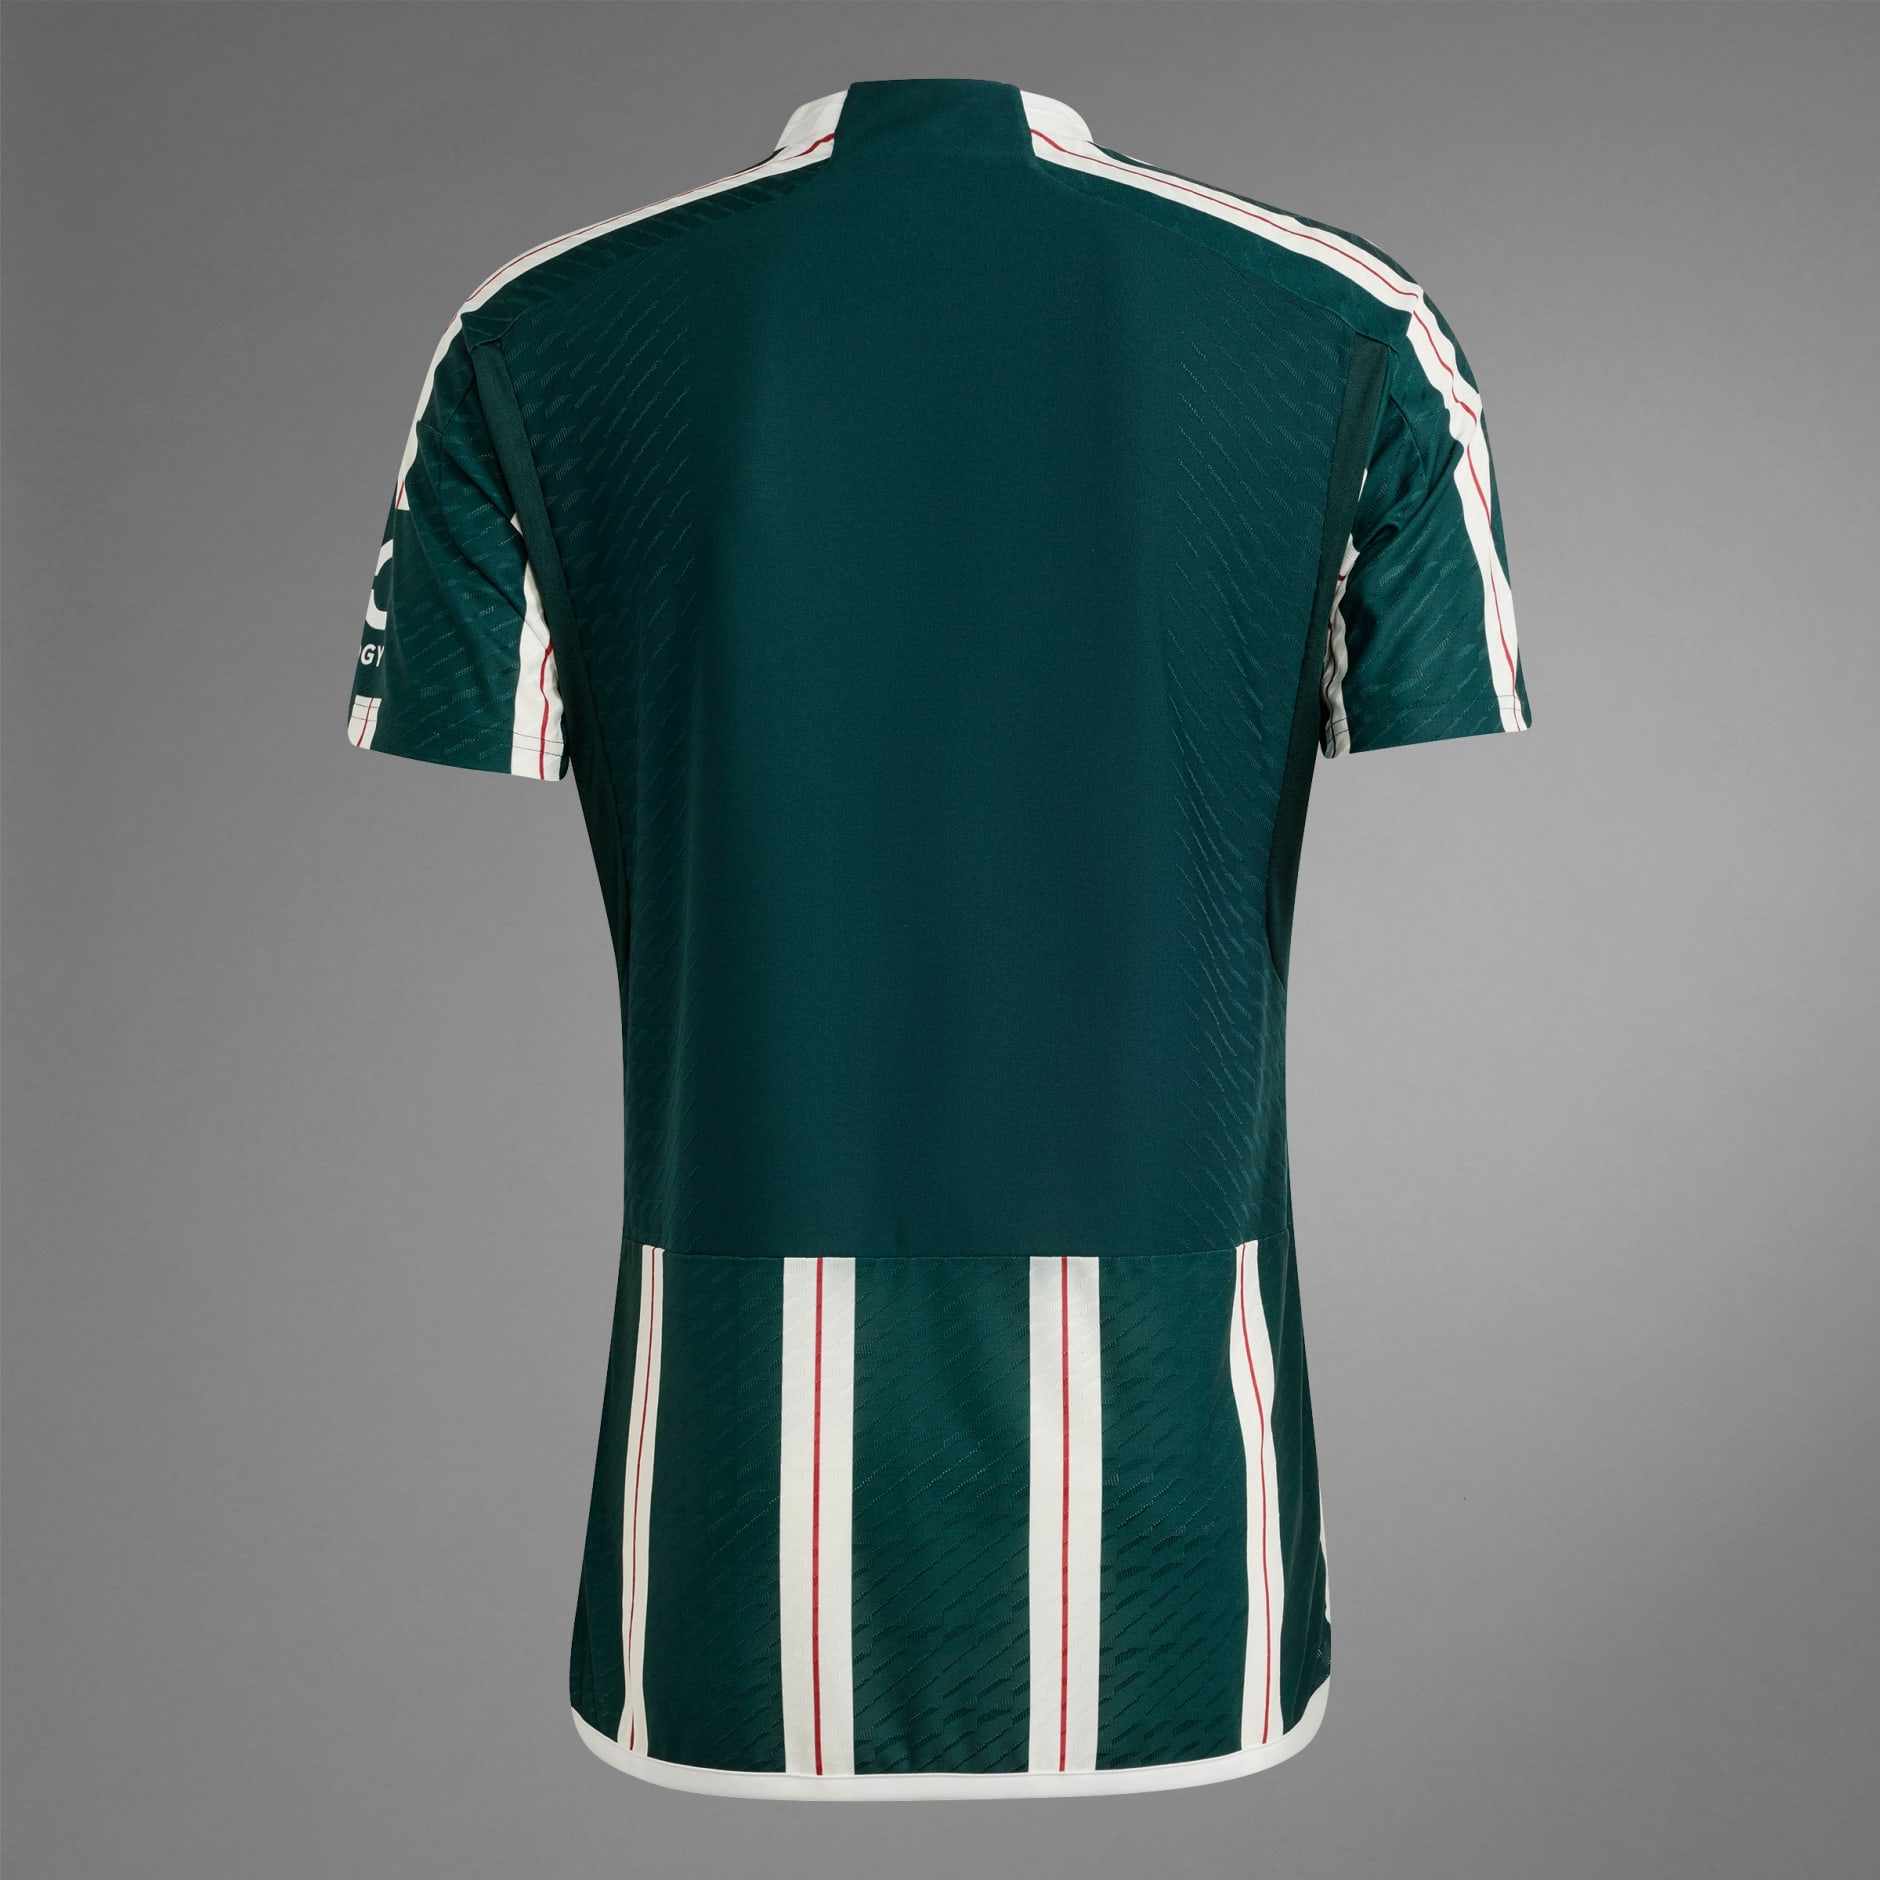 man united stripe kit